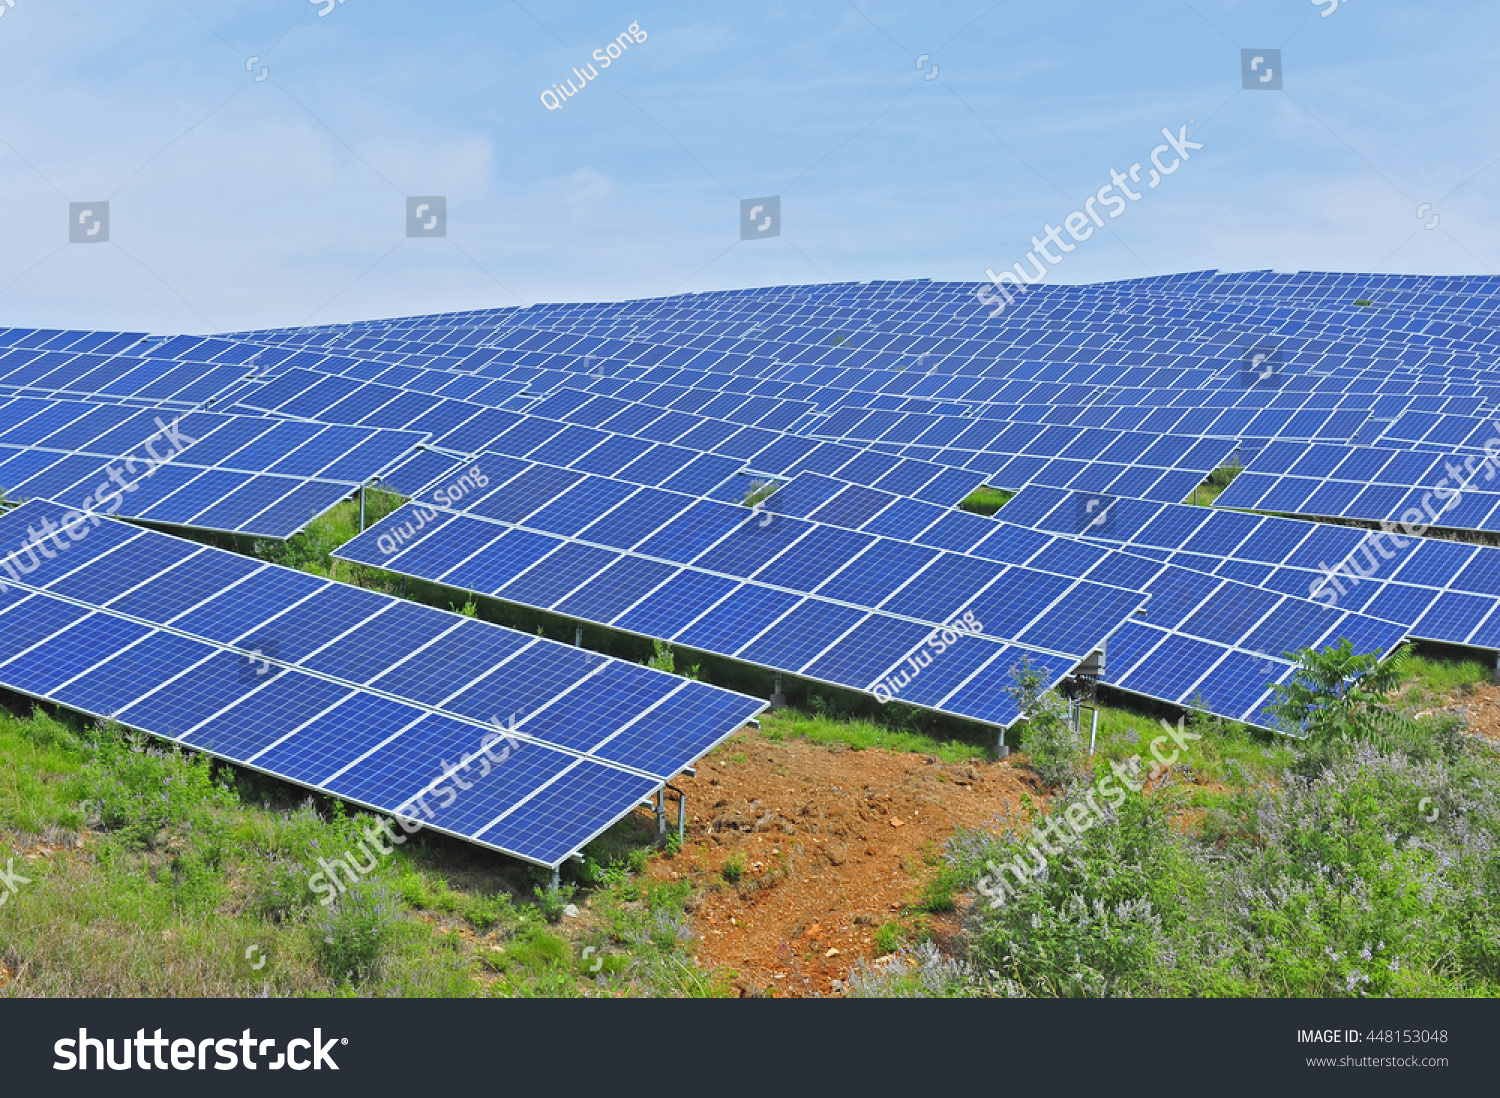 Solar Power Equipment Stock Photo 448153048 : Shutterstock